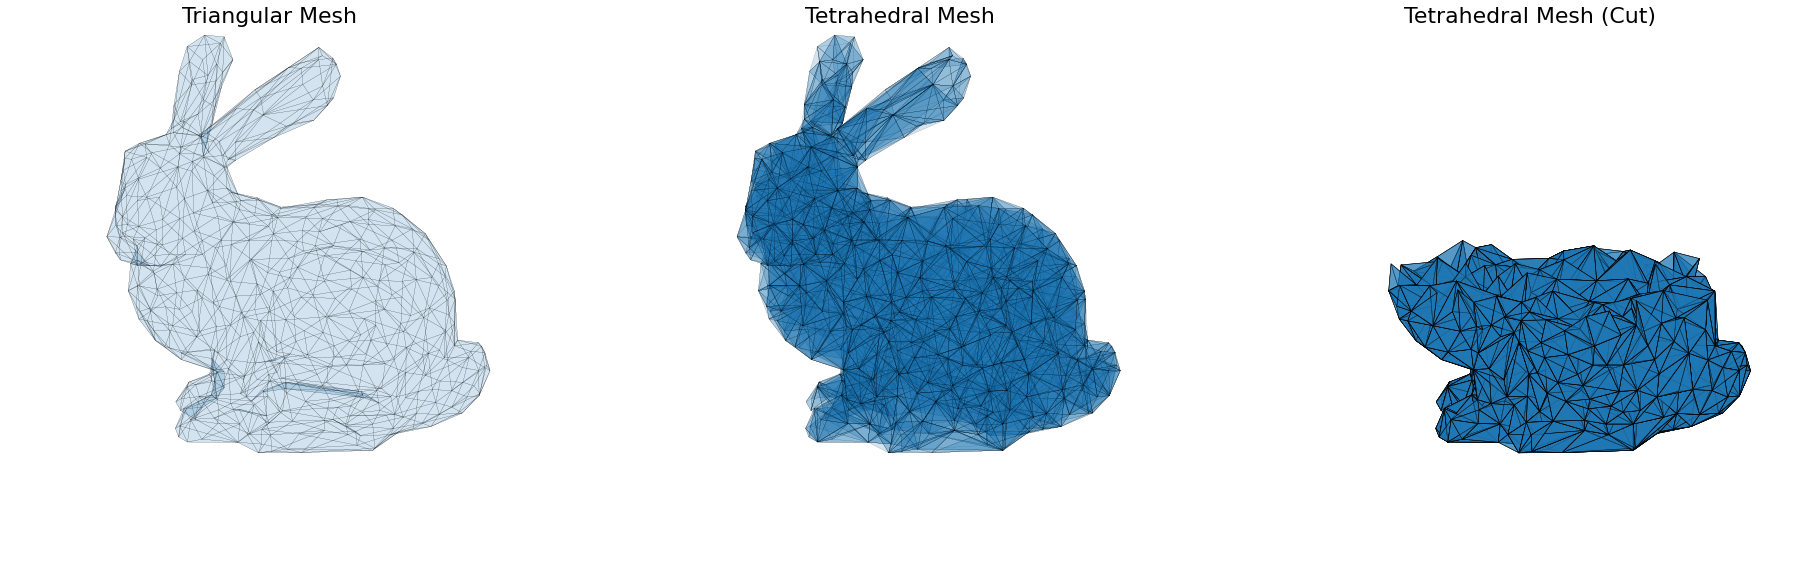 Simulating Magnetic Fields of Arbitrary Meshes using Radia and TetGen